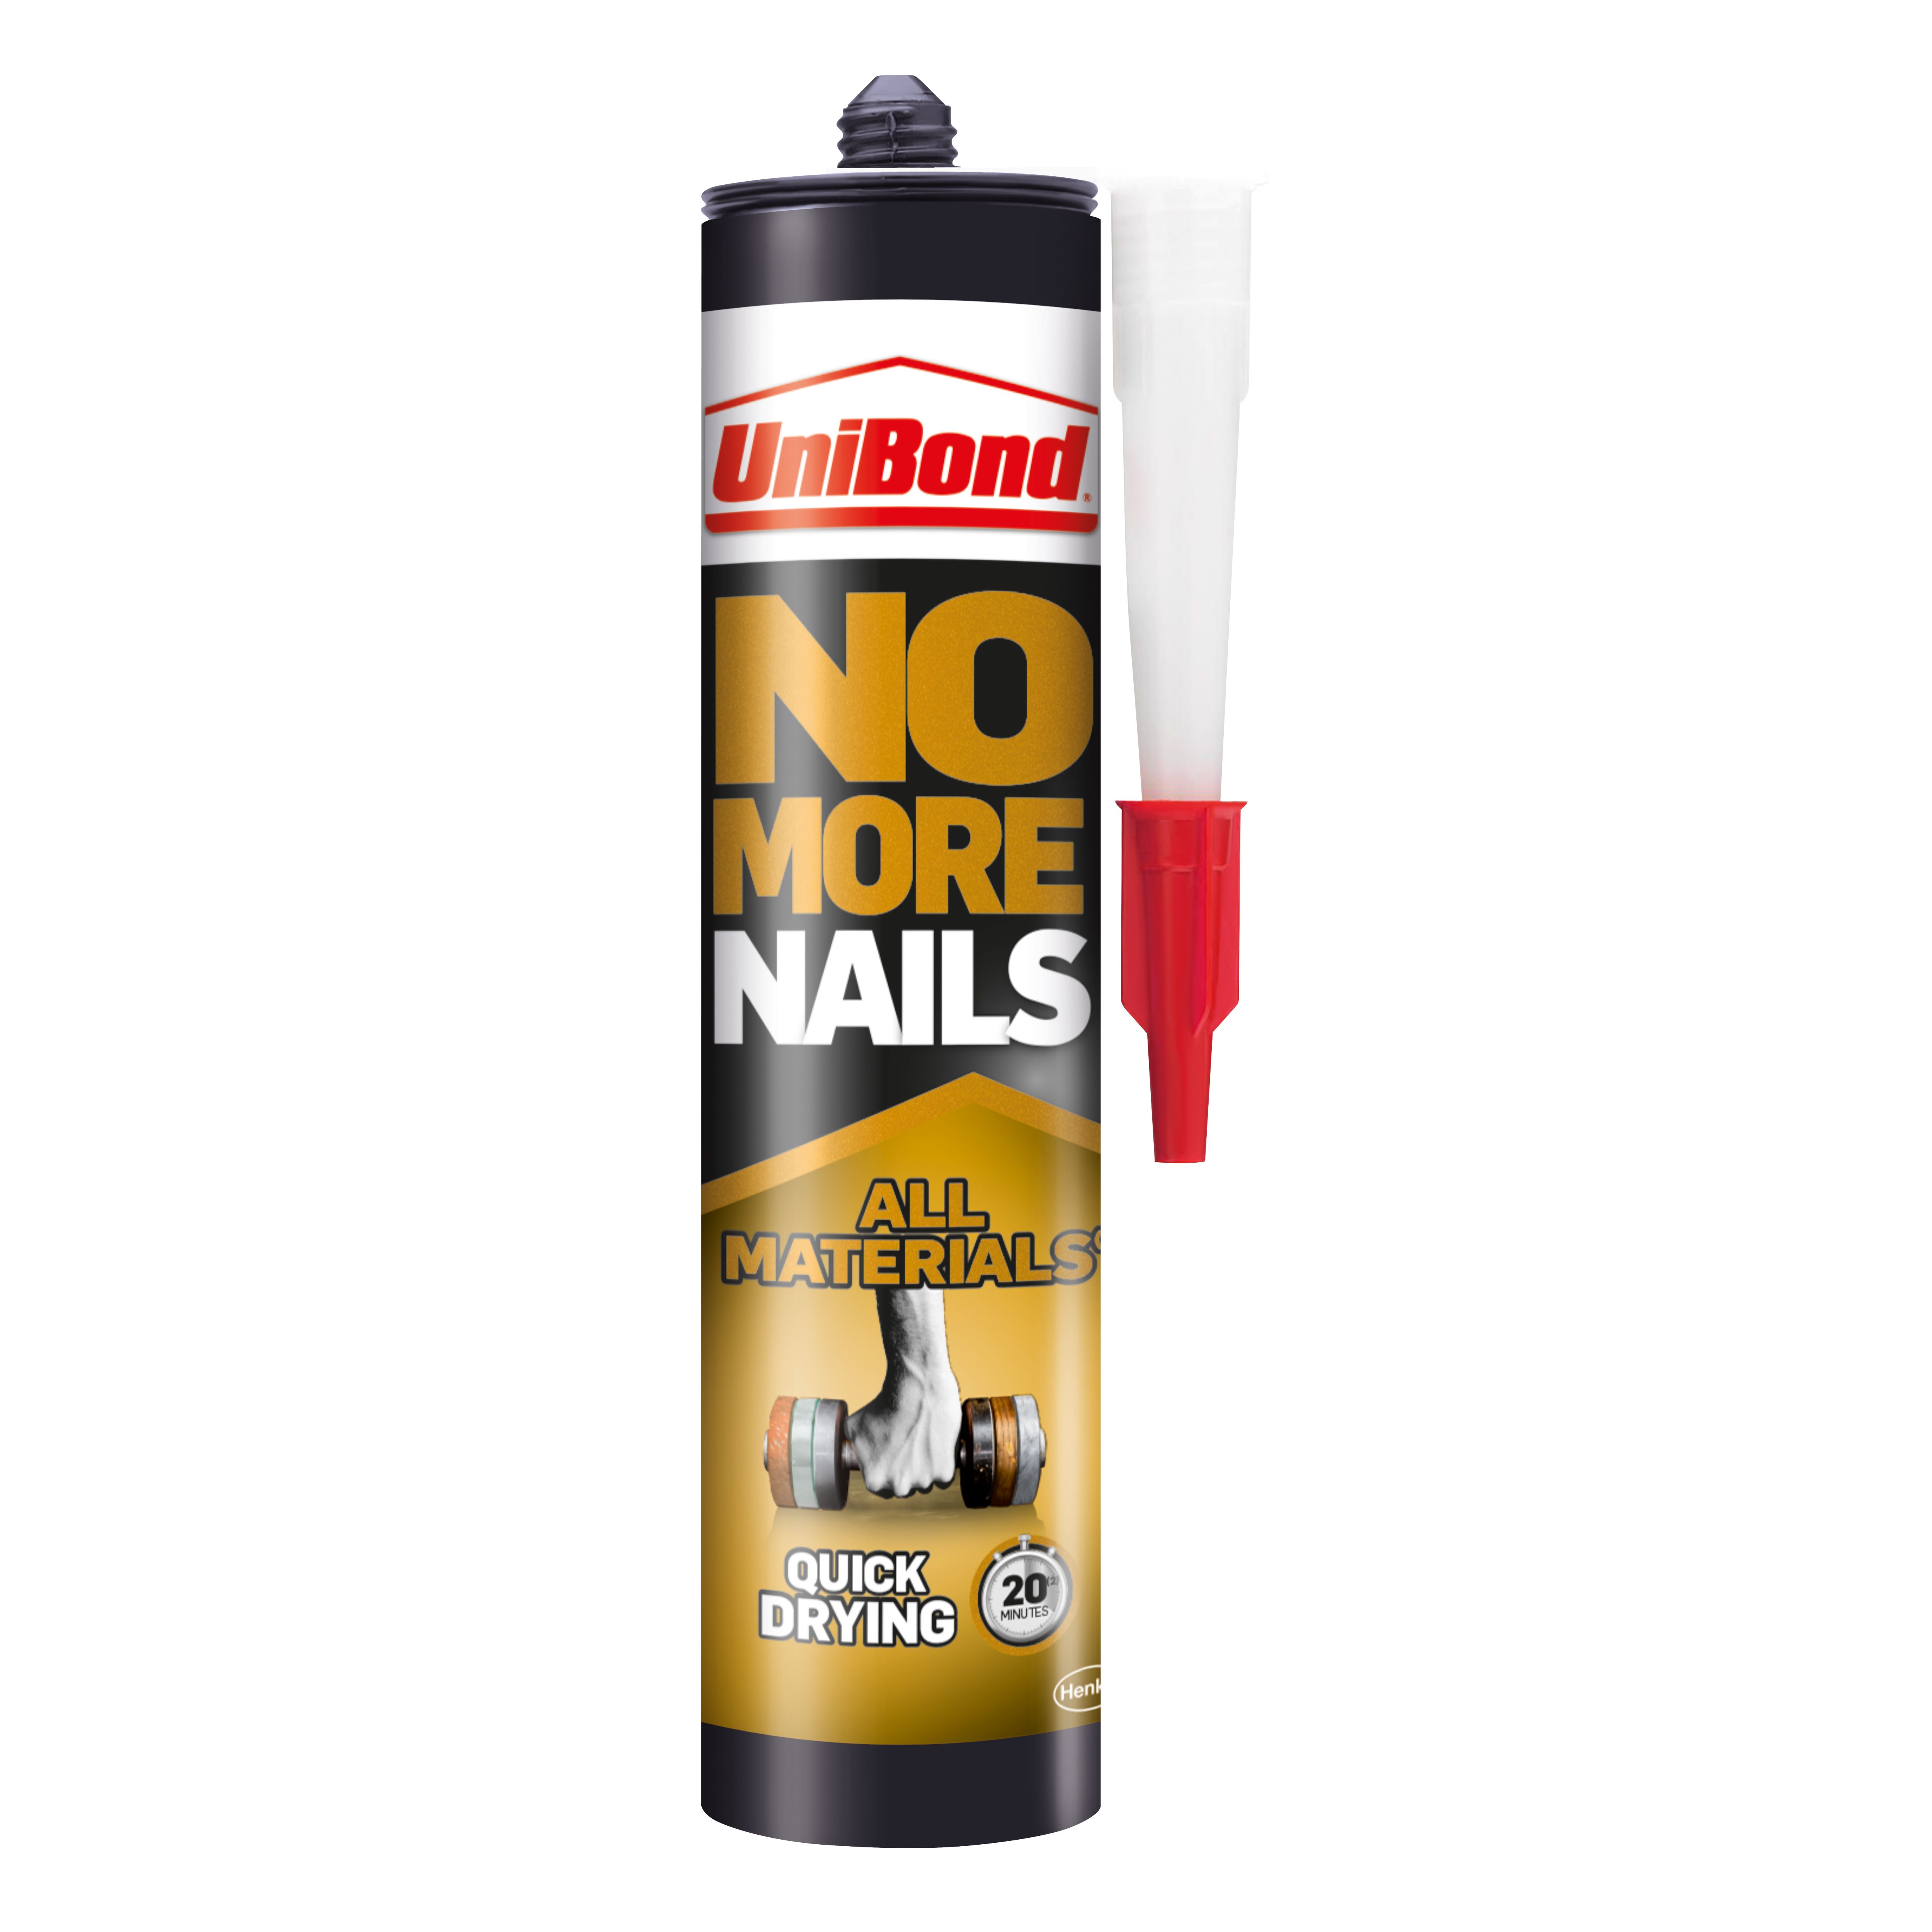 UniBond No More Nails Quick Drying White All materials Grab adhesive 390g